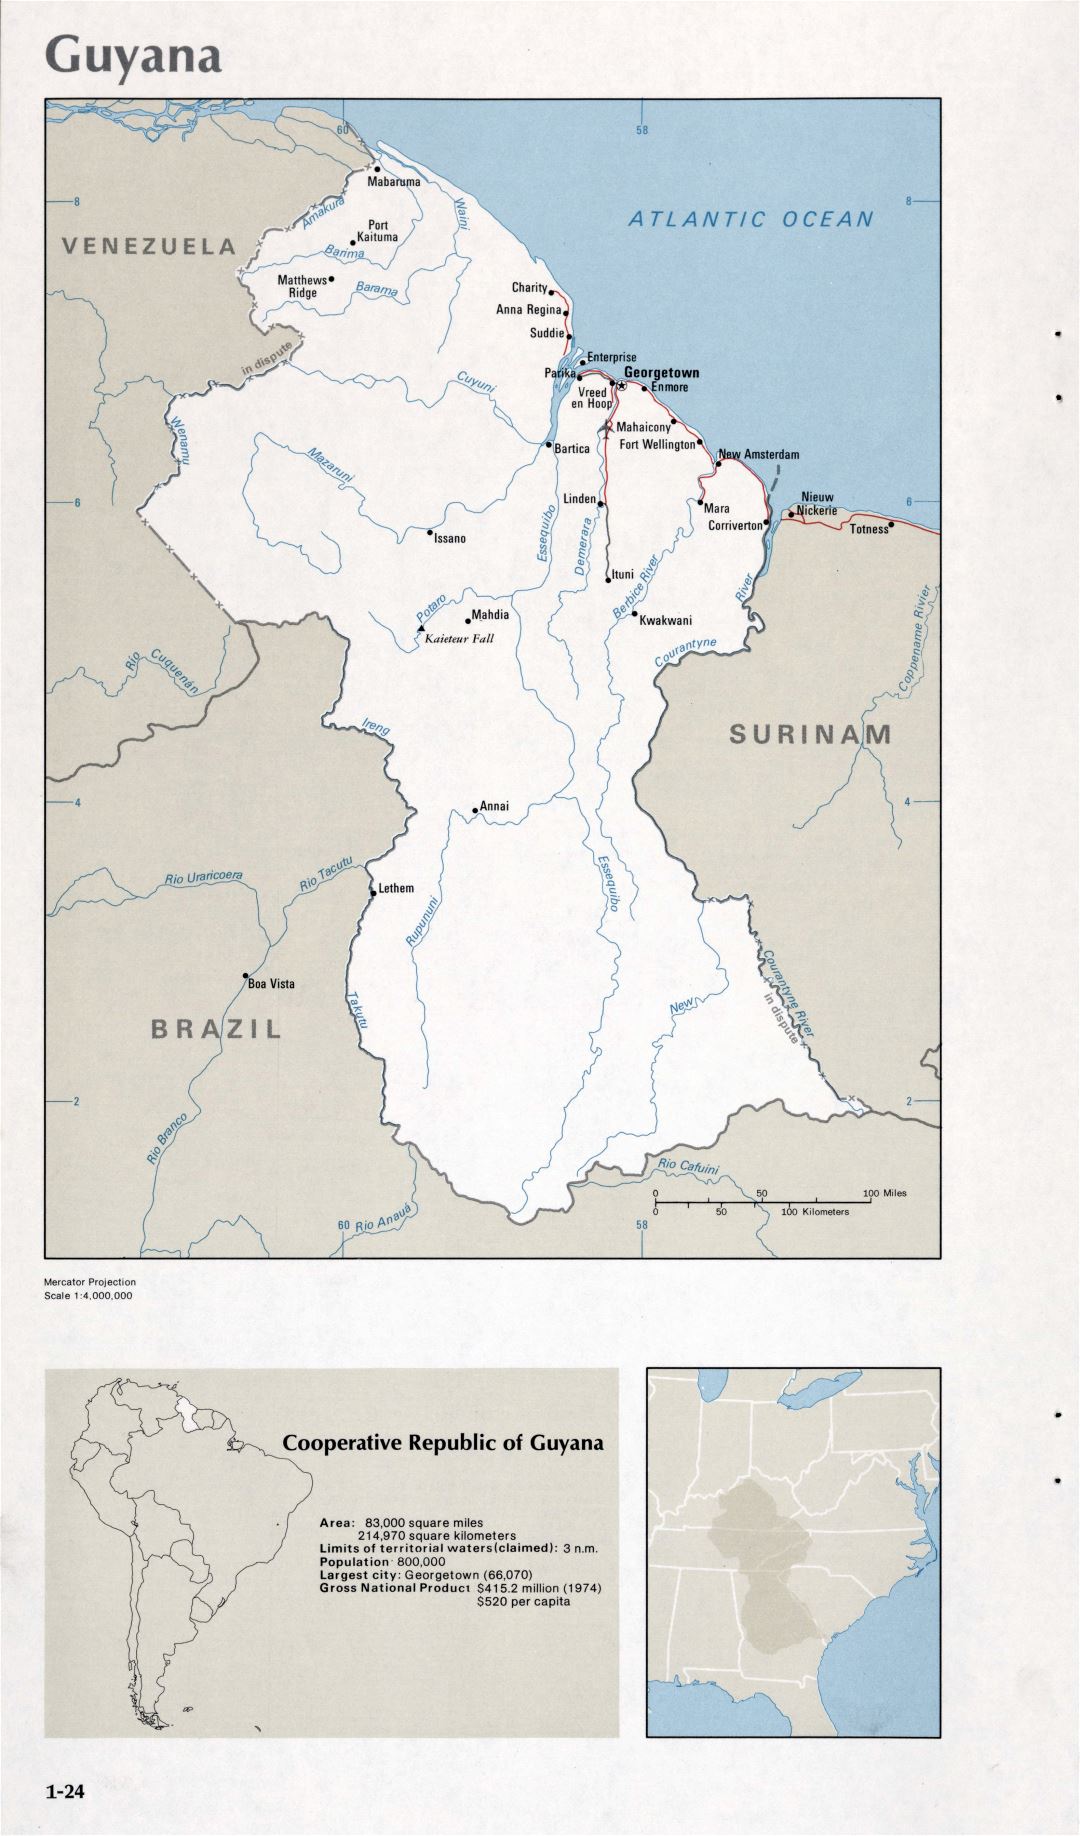 Map of Guyana (1-24)